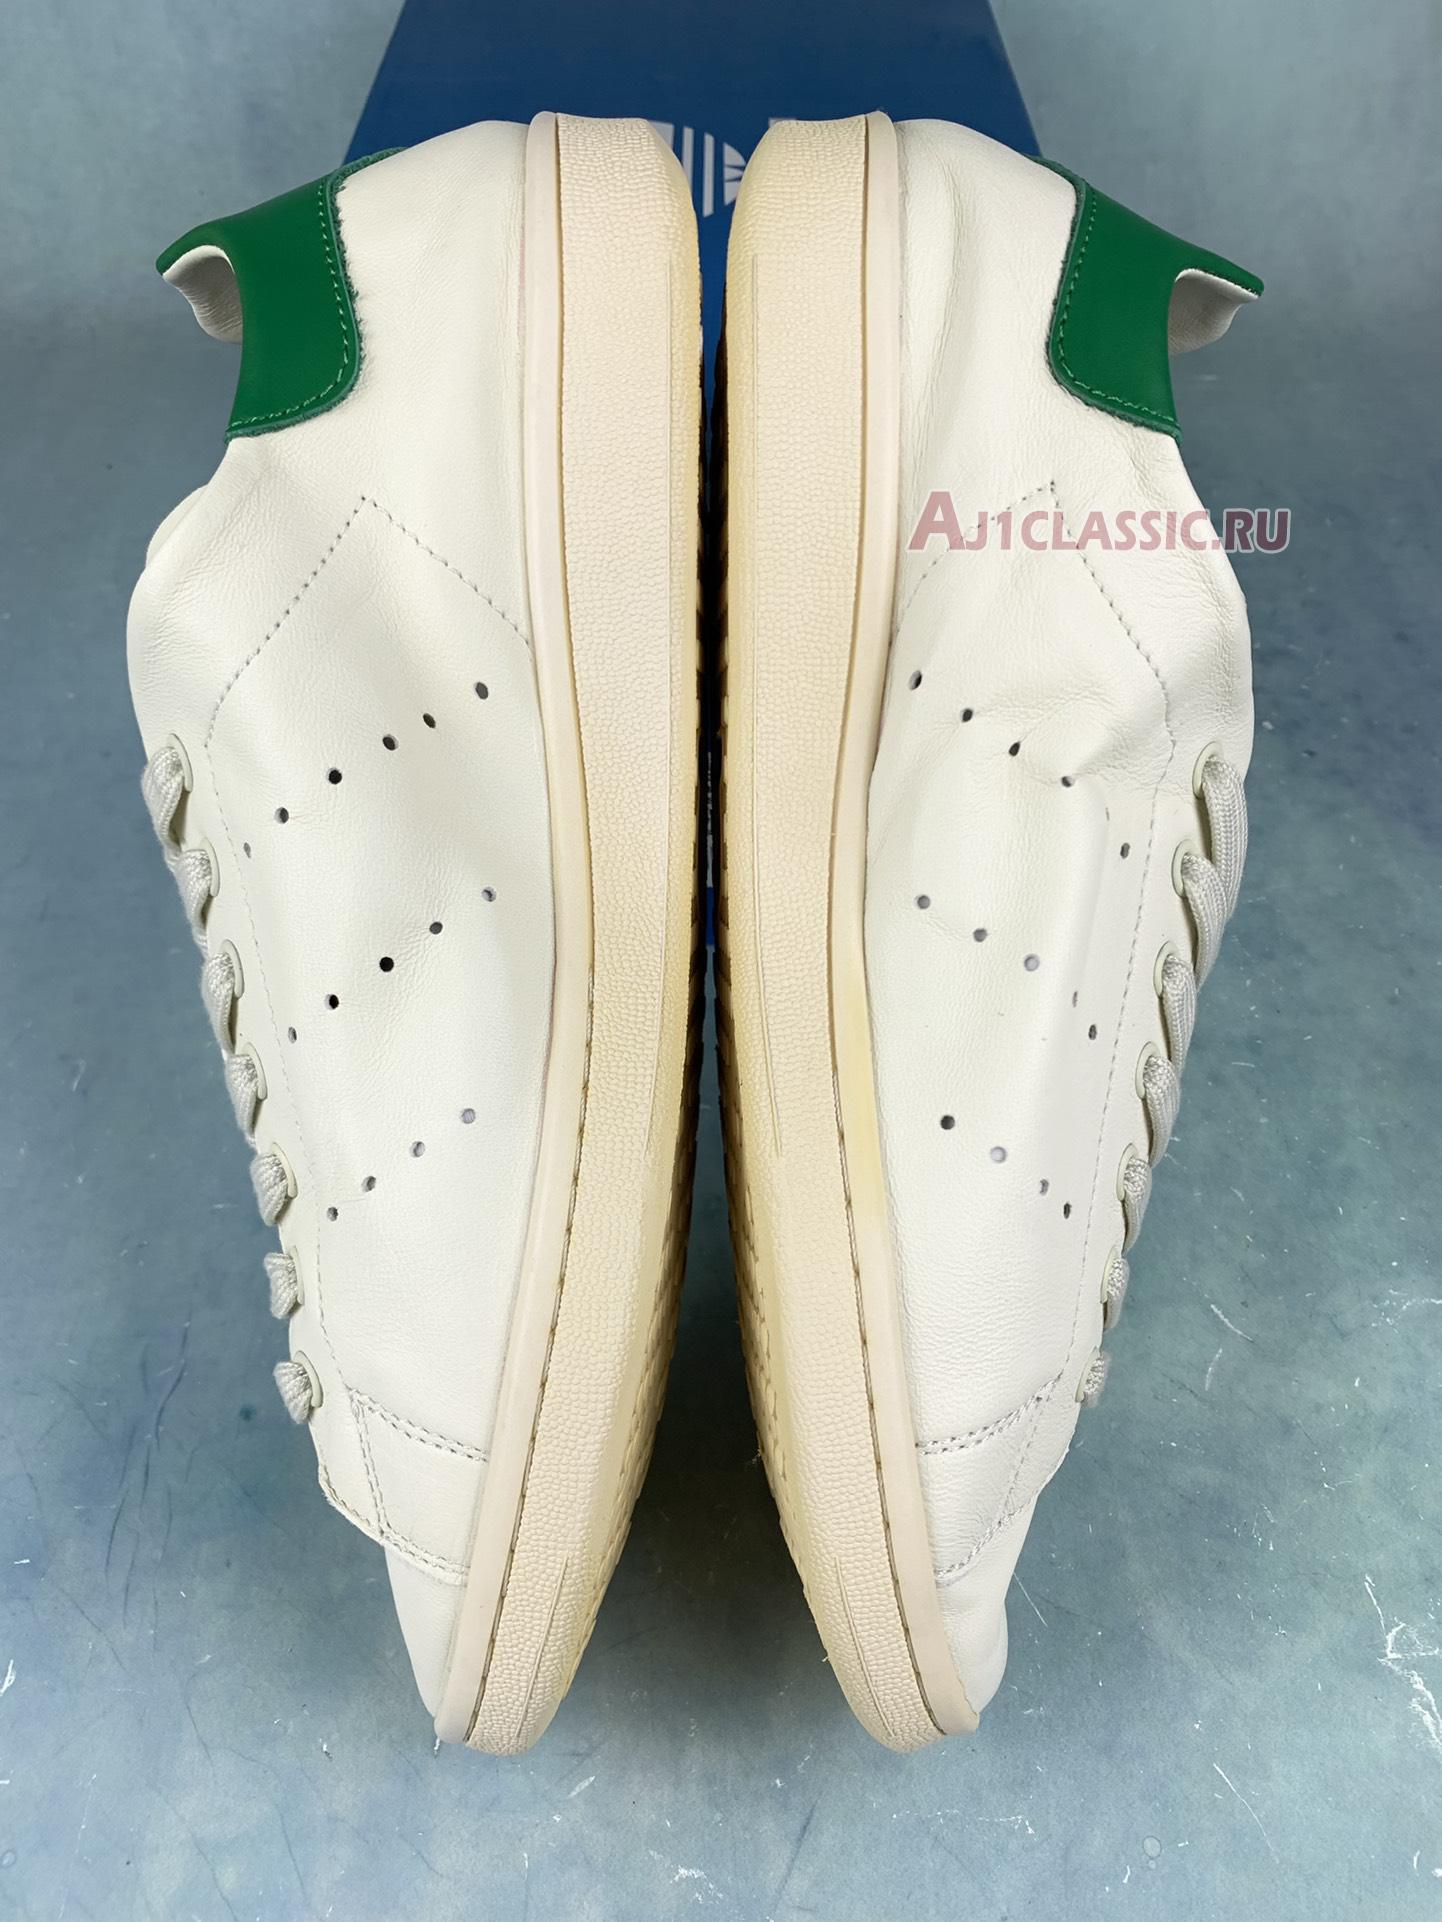 Adidas x Balenciaga Stan Smith "Worn-Out - Off White Green" 721835 WBDV4 9703